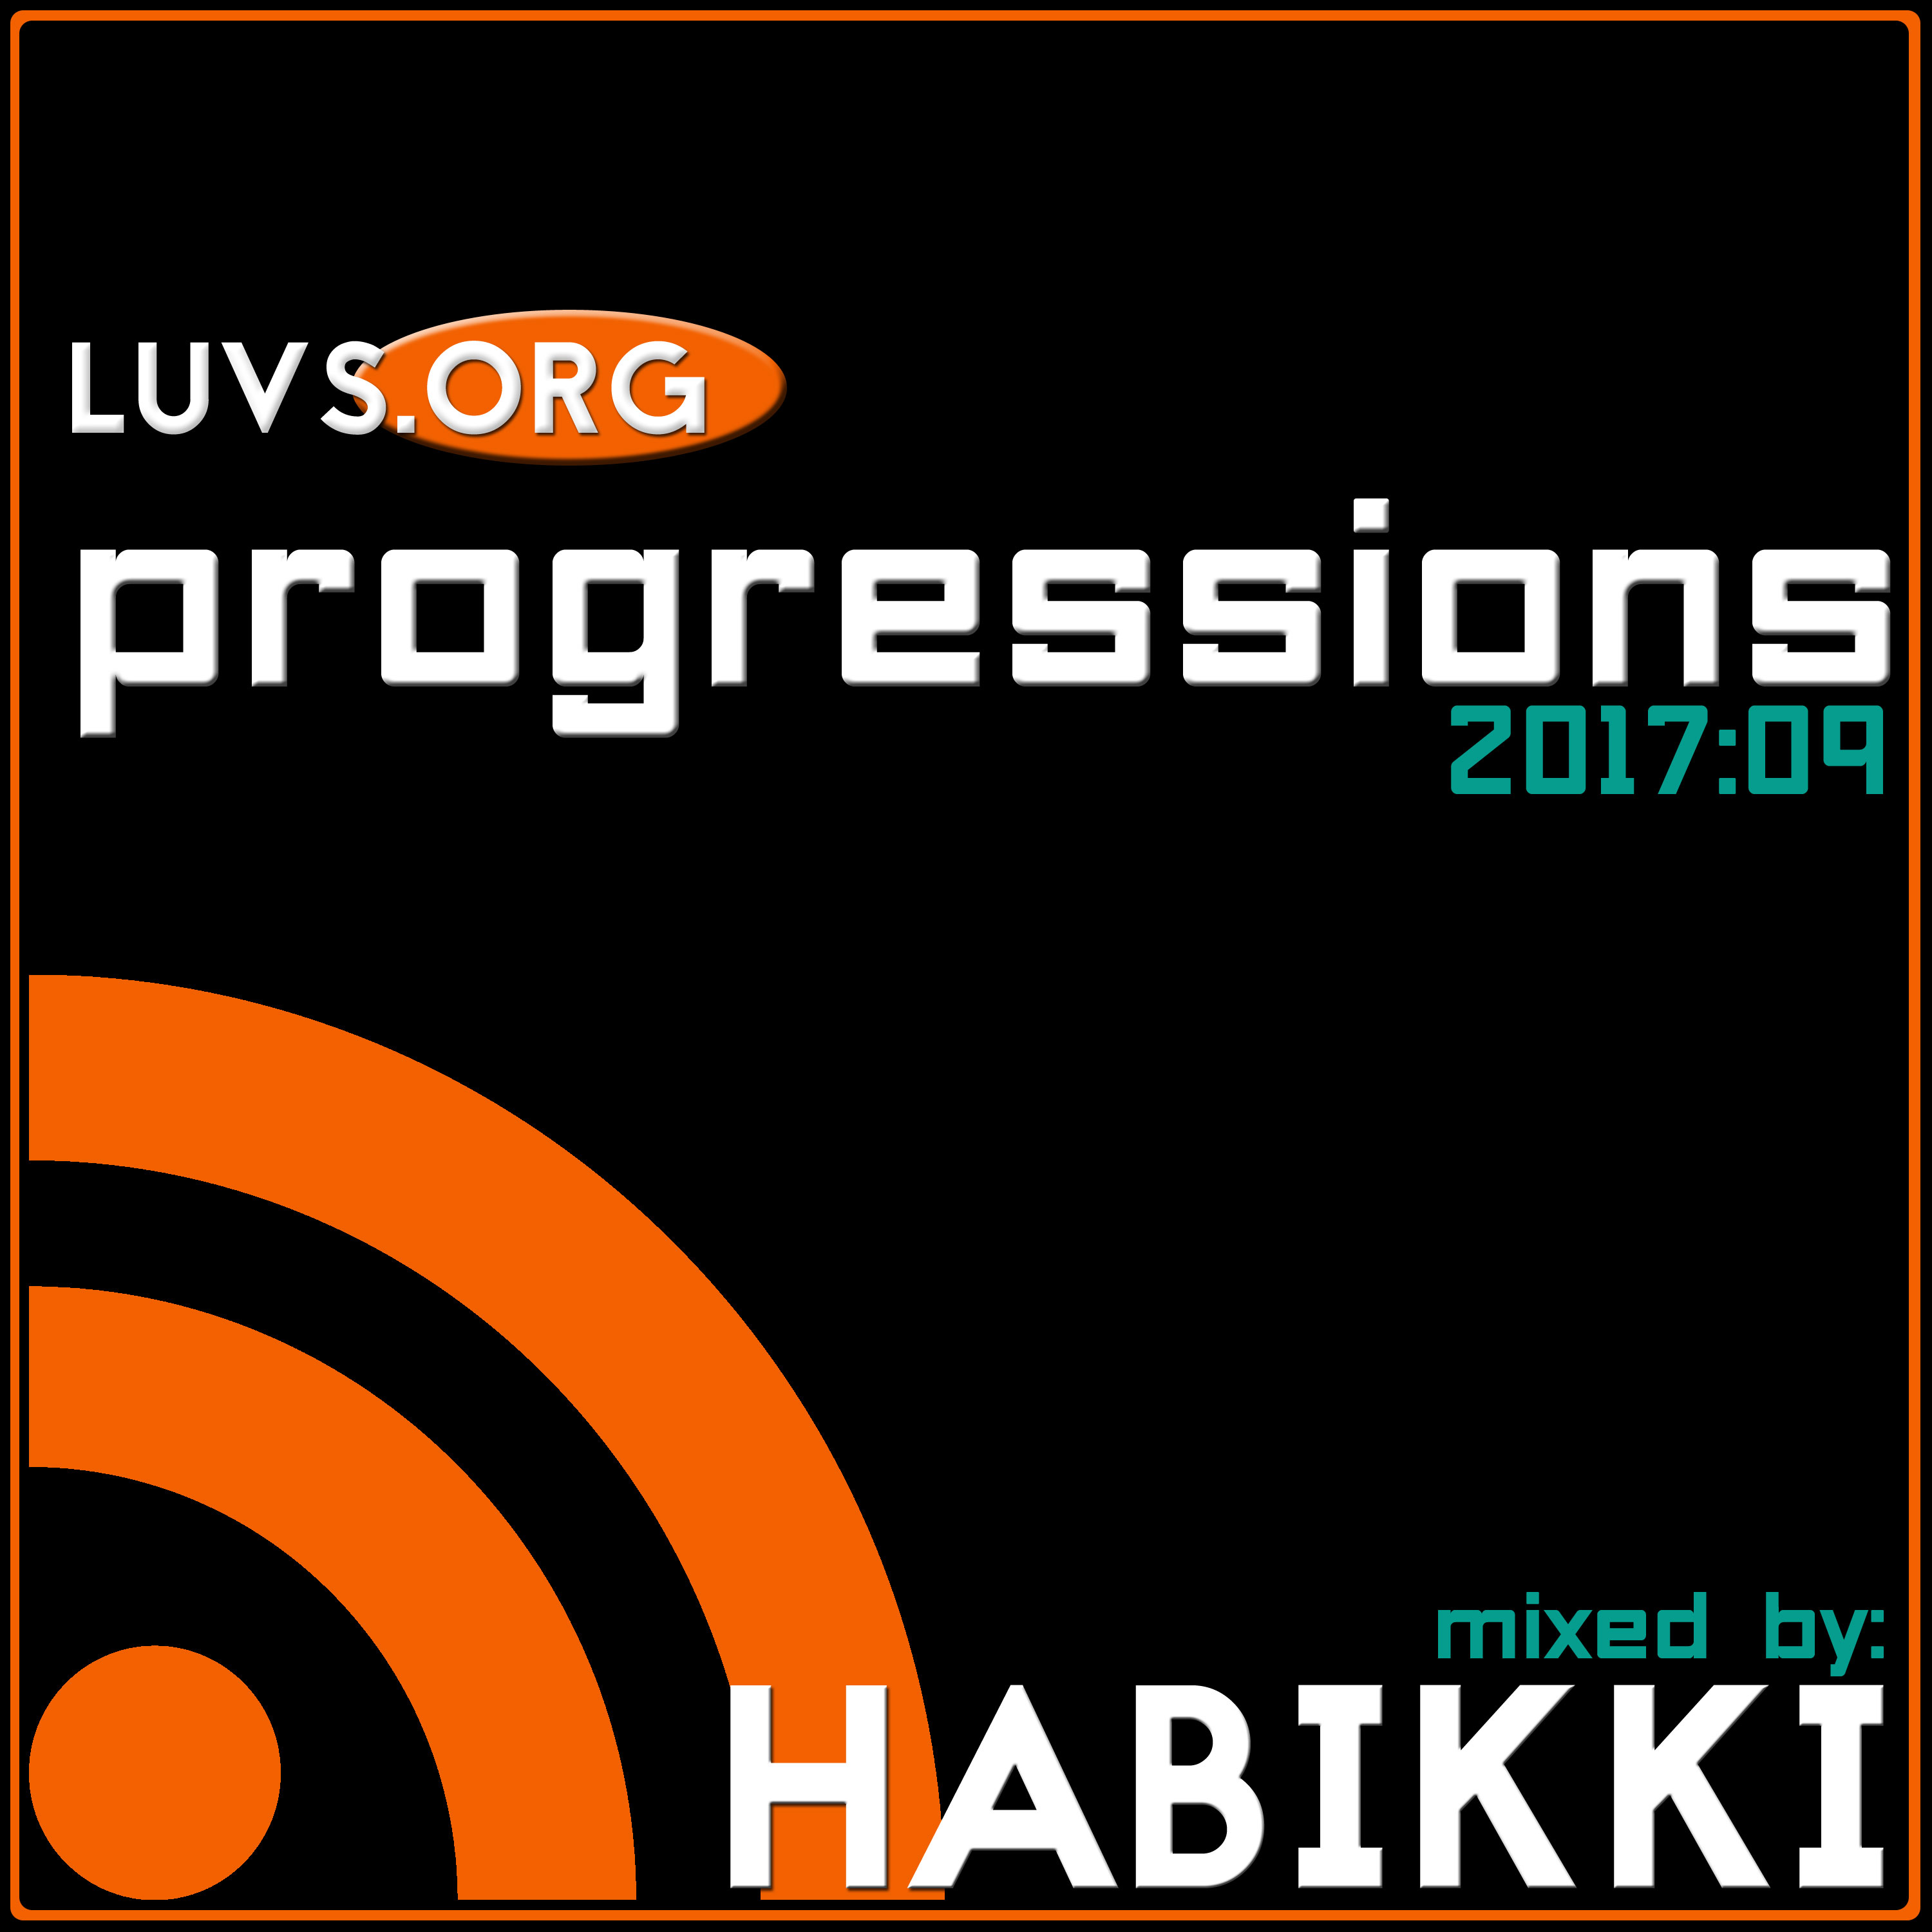 Luvs.org Sessions: [2017:09] Progressions